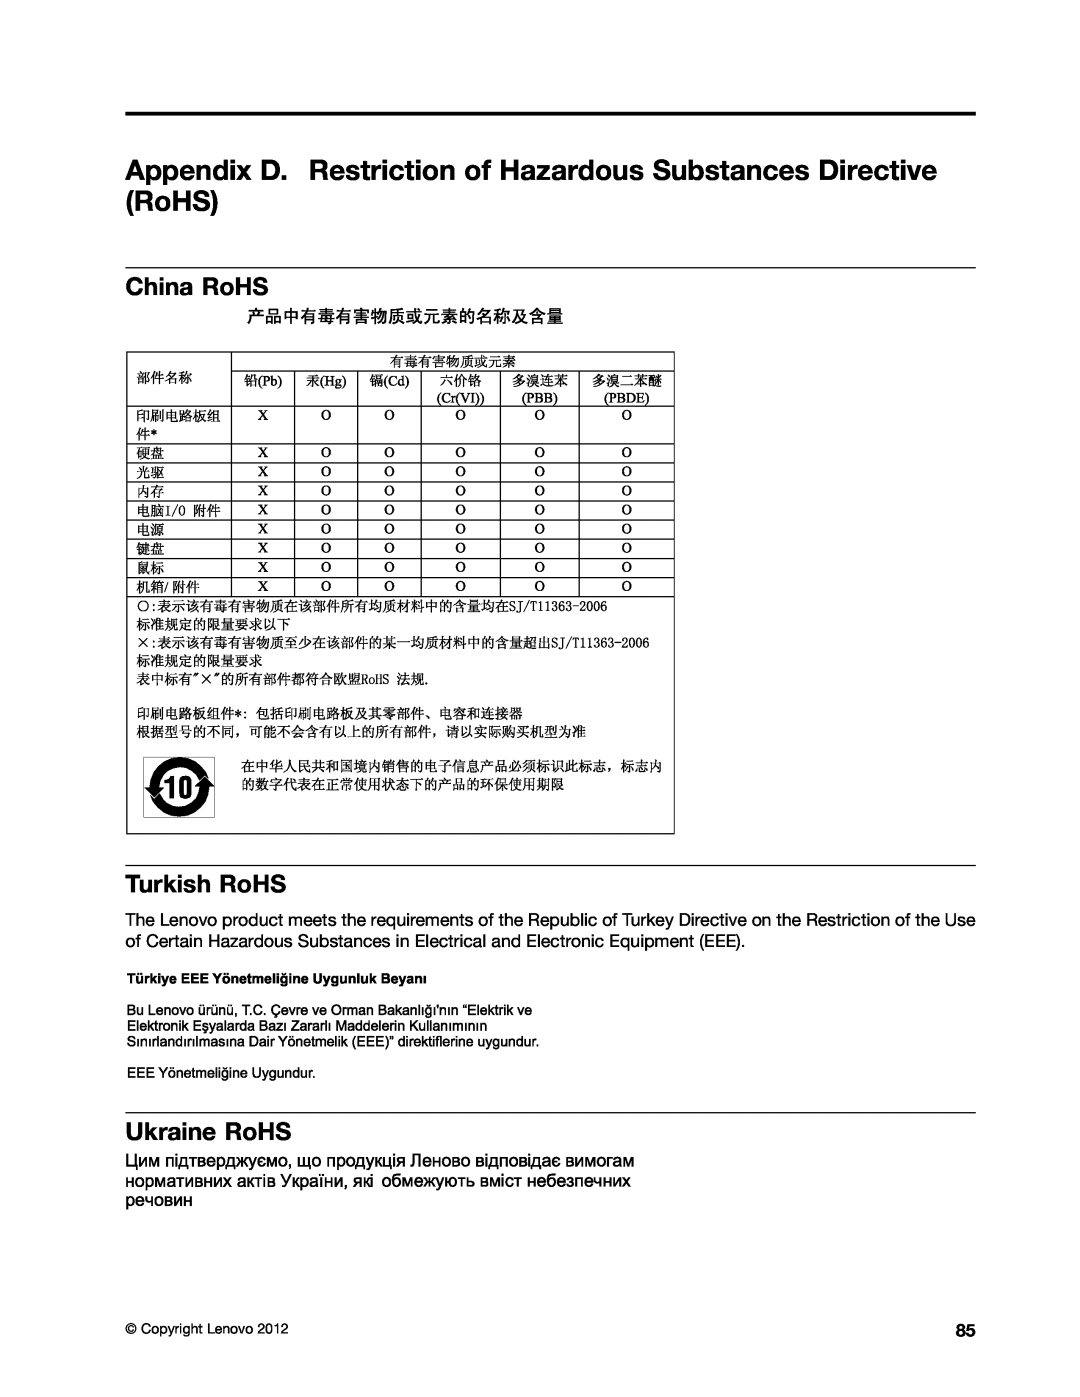 Lenovo 2117EKU manual Appendix D. Restriction of Hazardous Substances Directive RoHS, China RoHS Turkish RoHS, Ukraine RoHS 